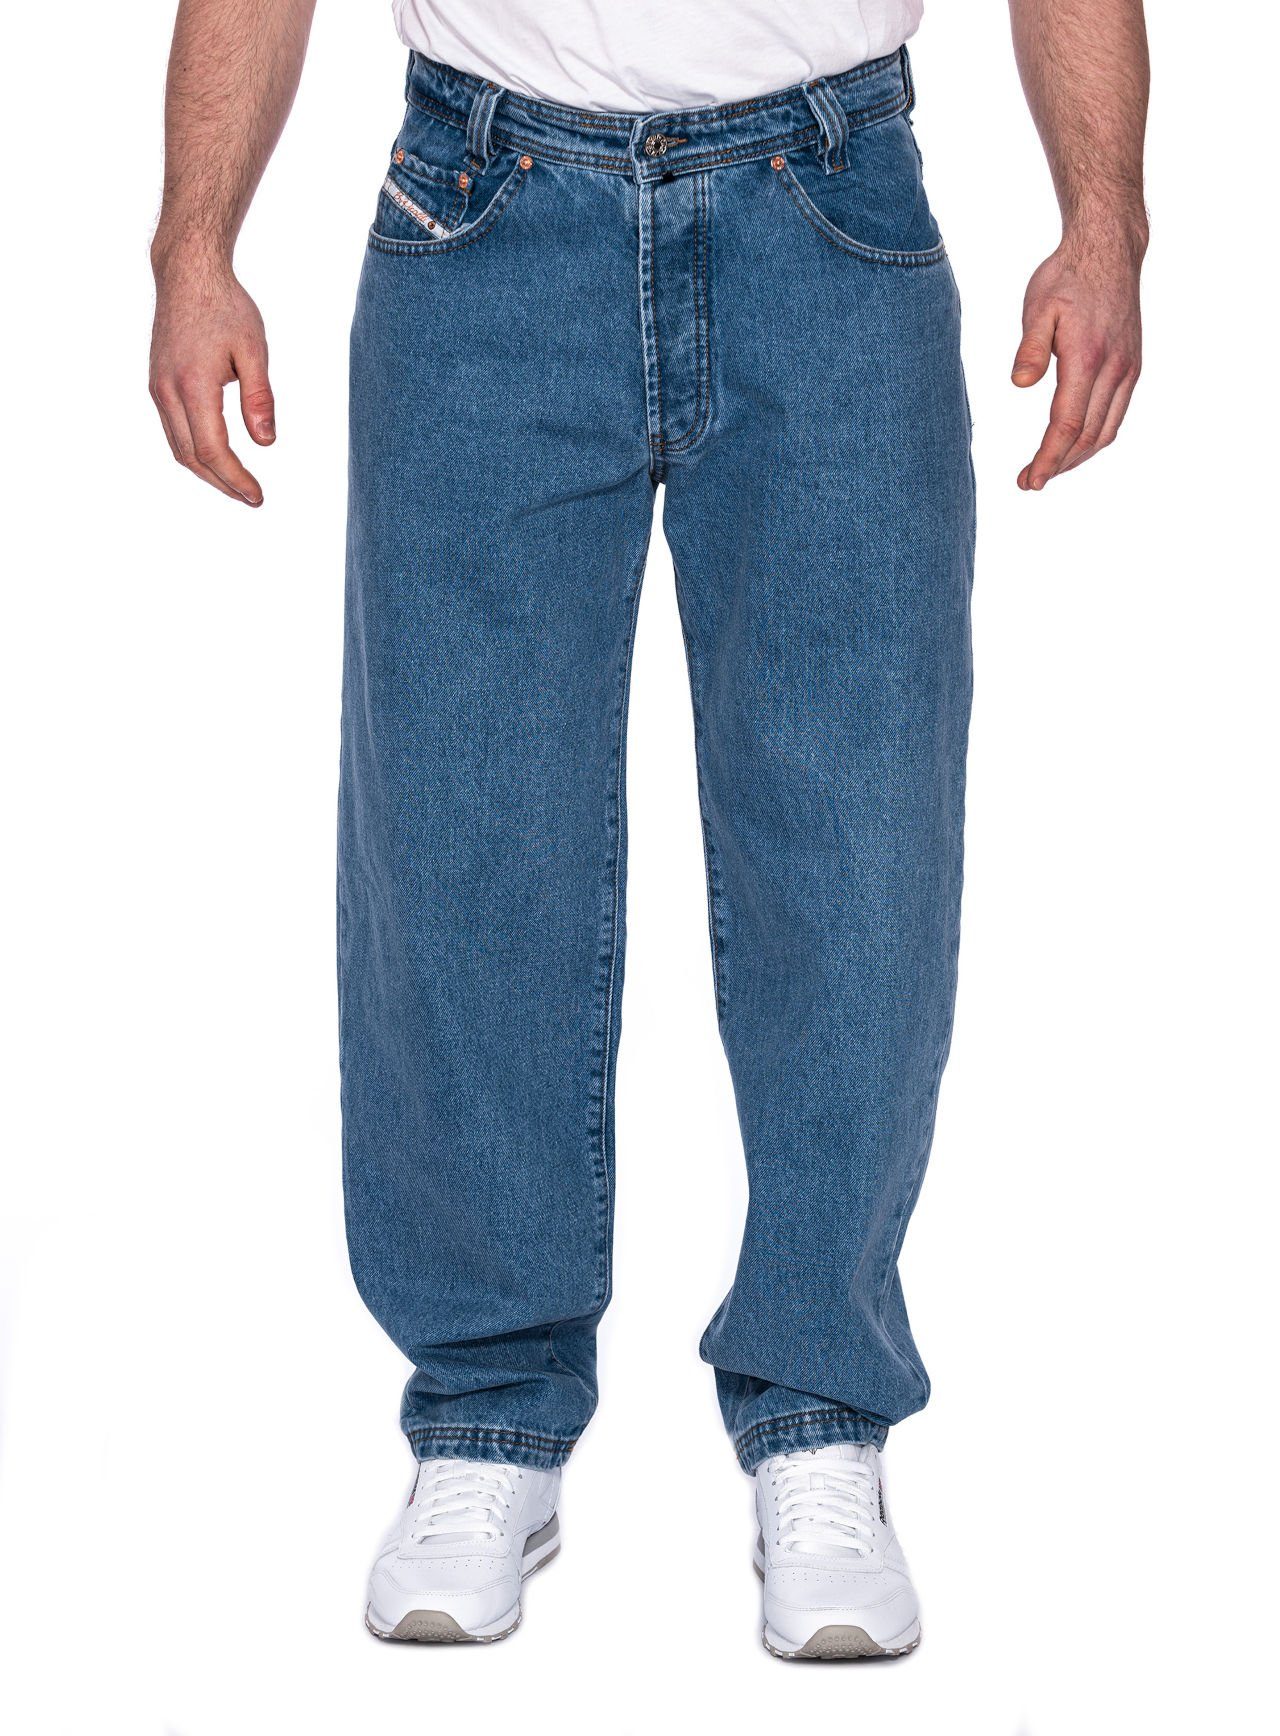 PICALDI Jeans Jeans Loose Jeans Pocket Detroit Five Zicco 471 Weite Fit